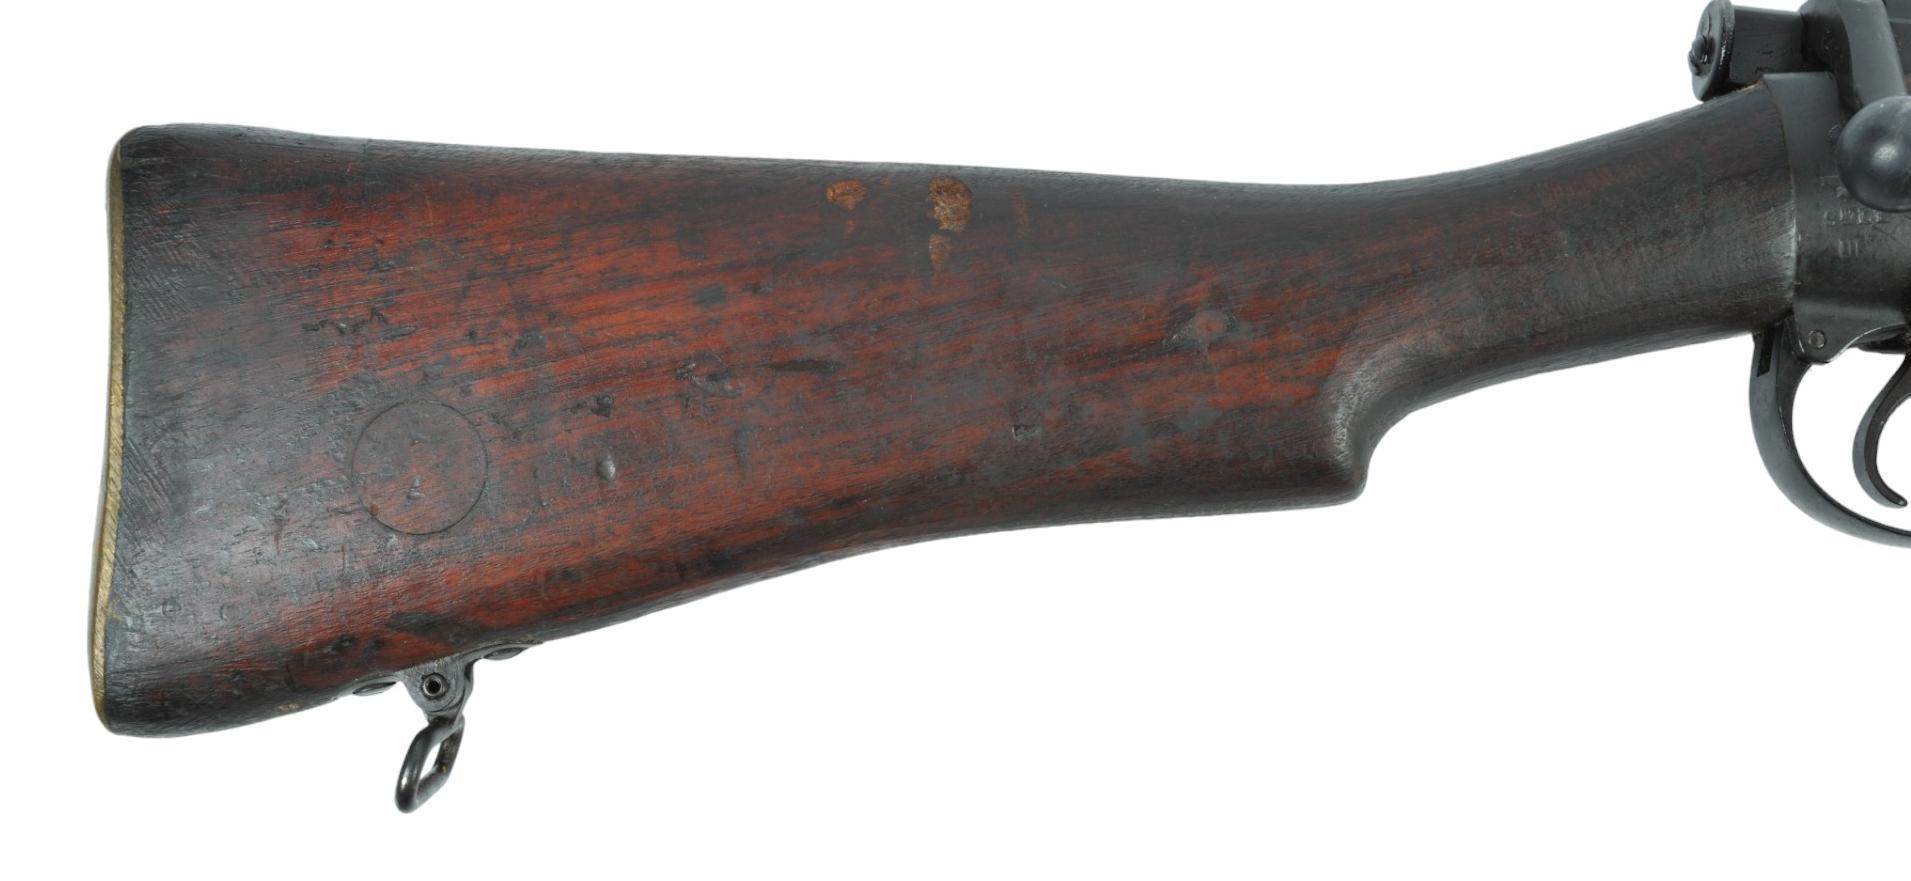 WW1 issue British No.1 Mk III* .303 Lee-Enfield Bolt-Action Rifle - FFL # X6460 (JRW1)